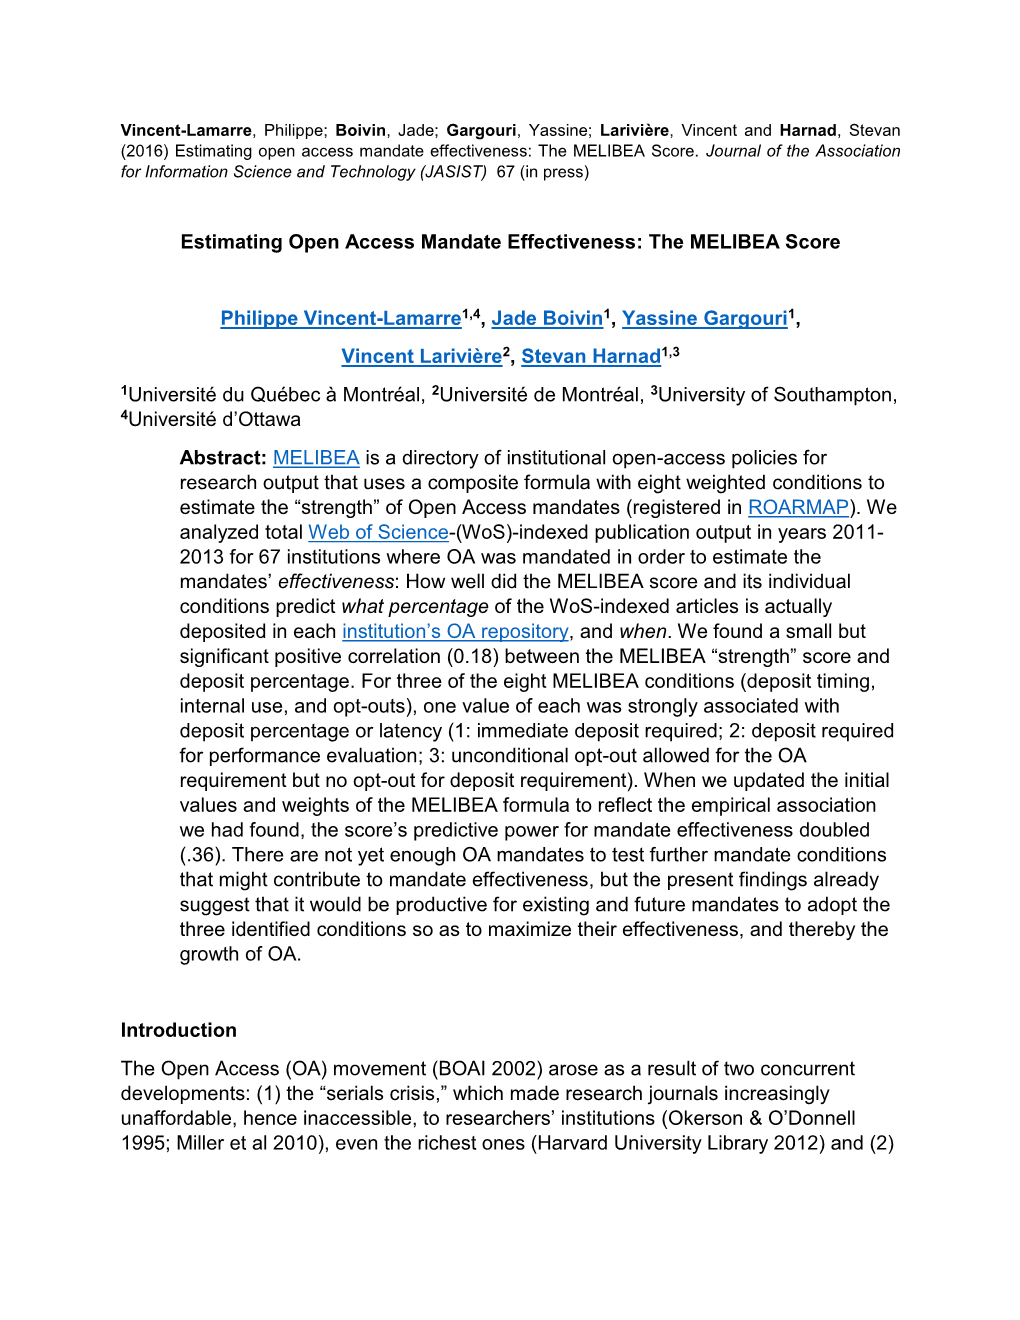 Estimating Open Access Mandate Effectiveness: the MELIBEA Score